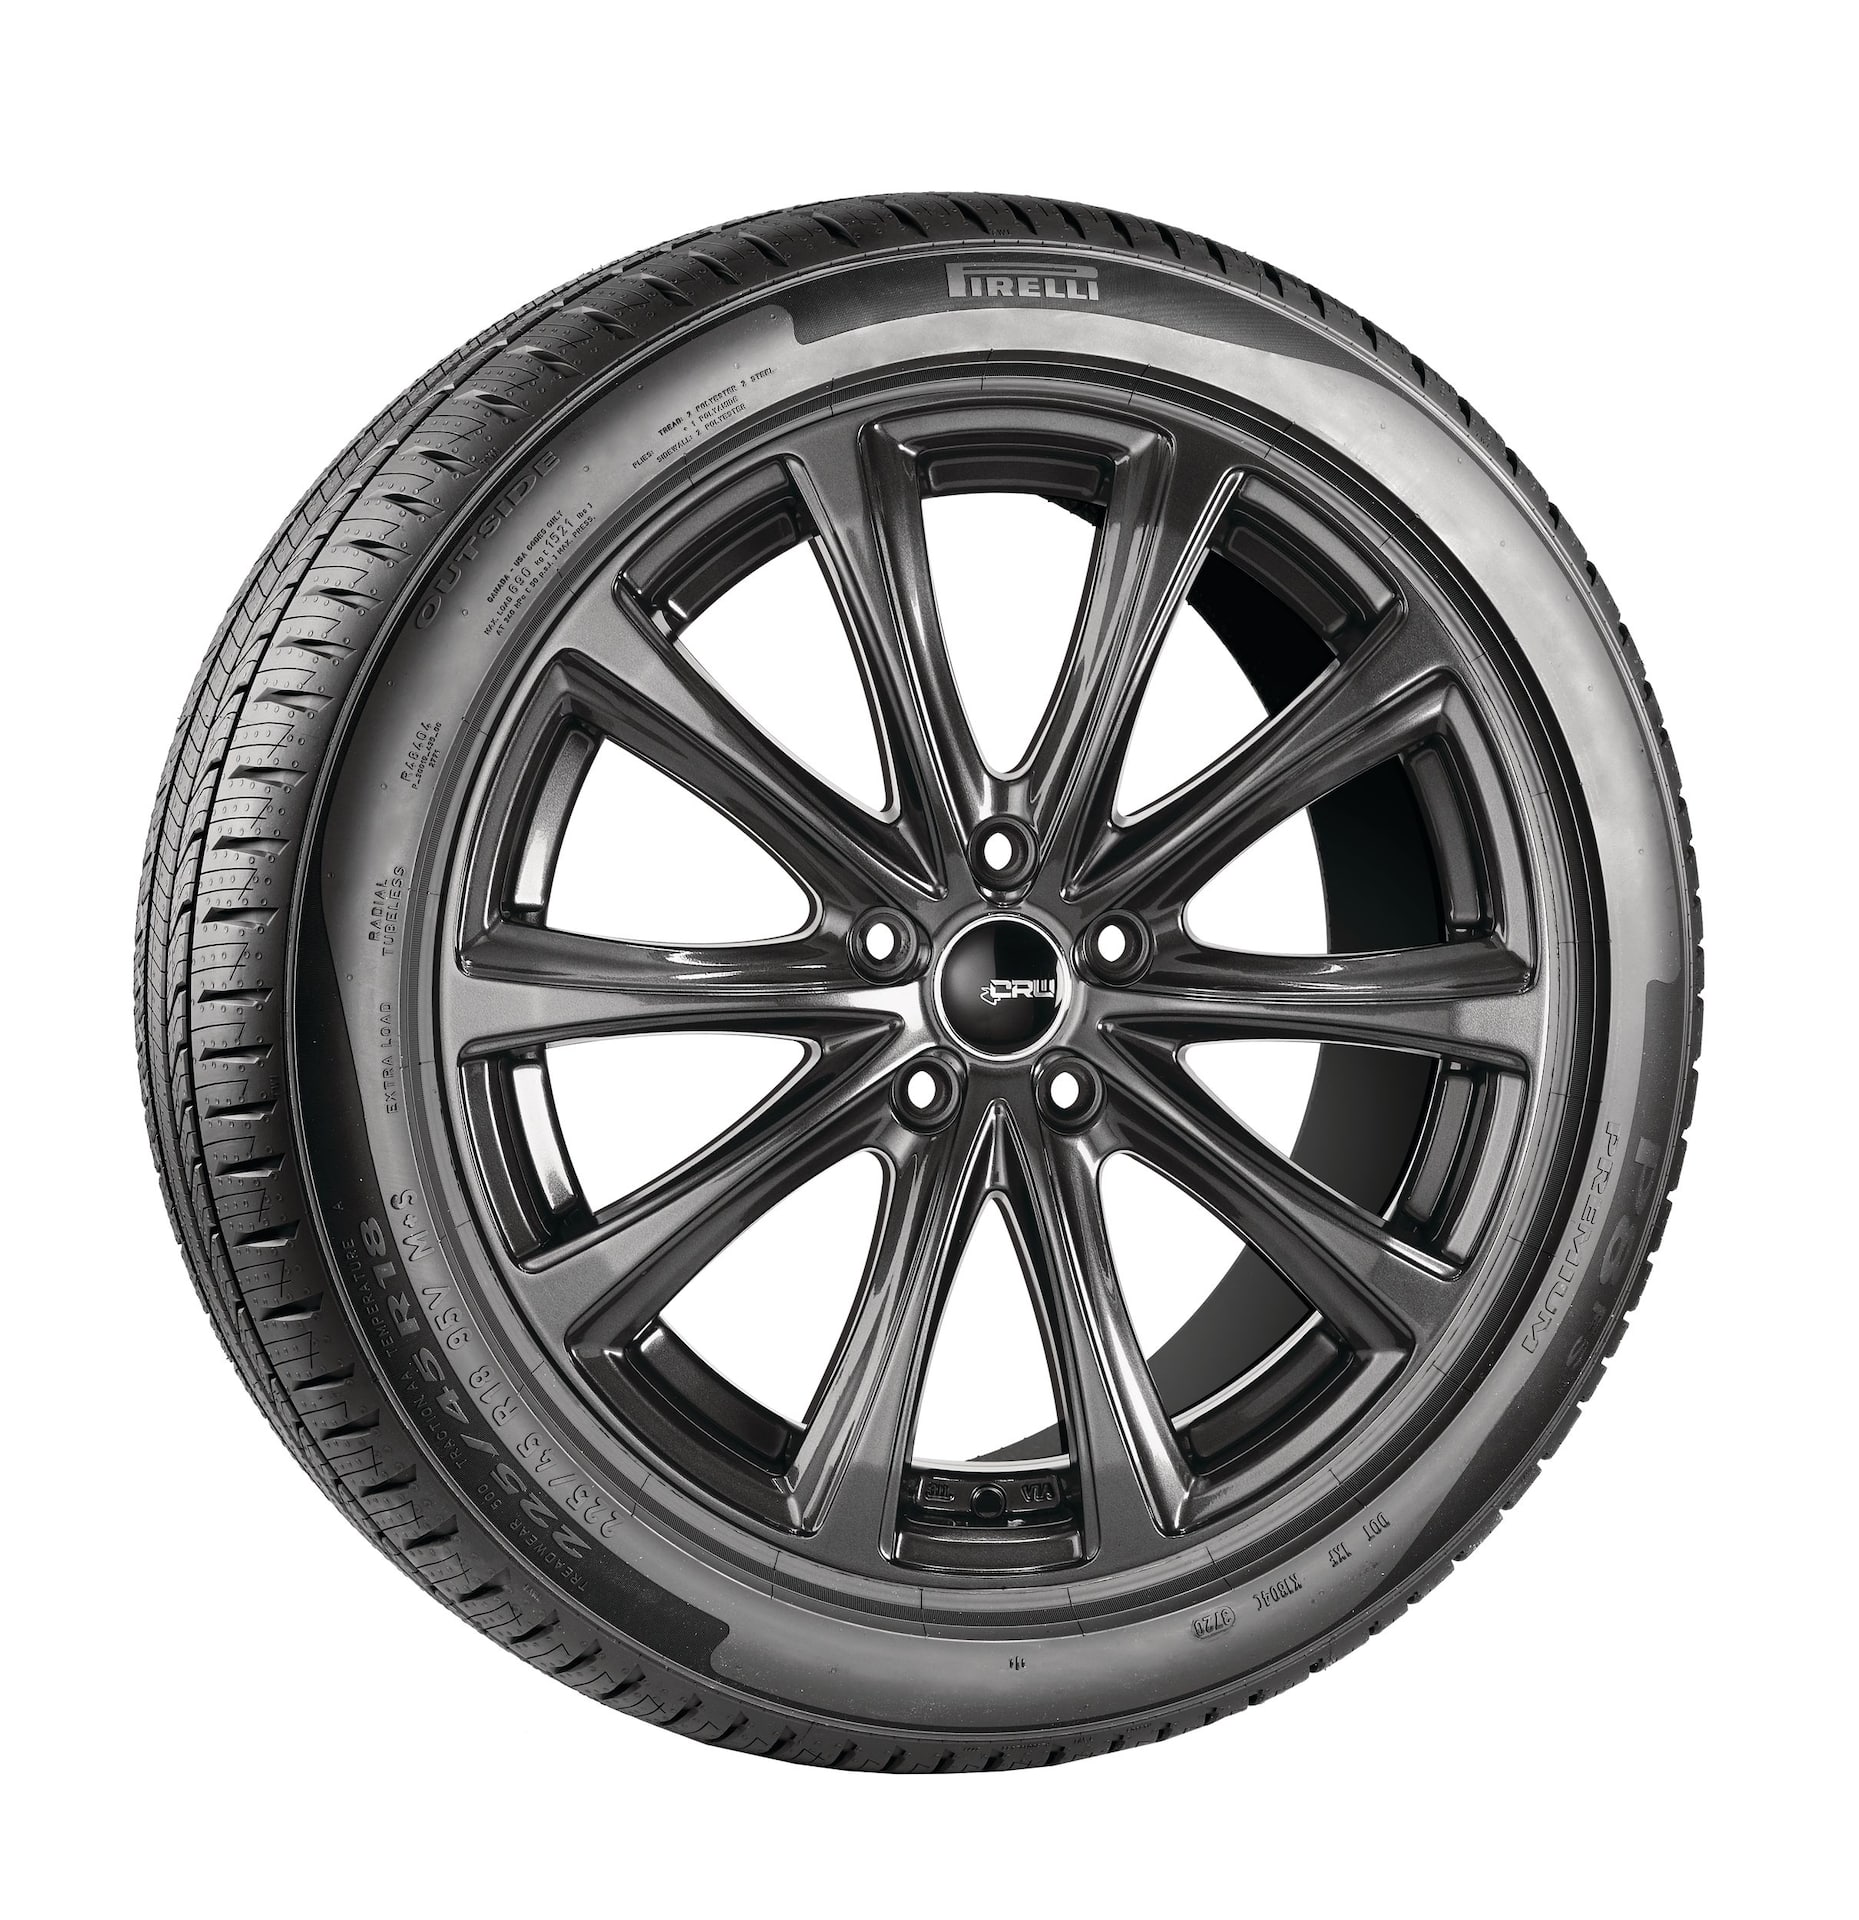 Pirelli P8 FS Premium All Season Tire For Passenger & CUV